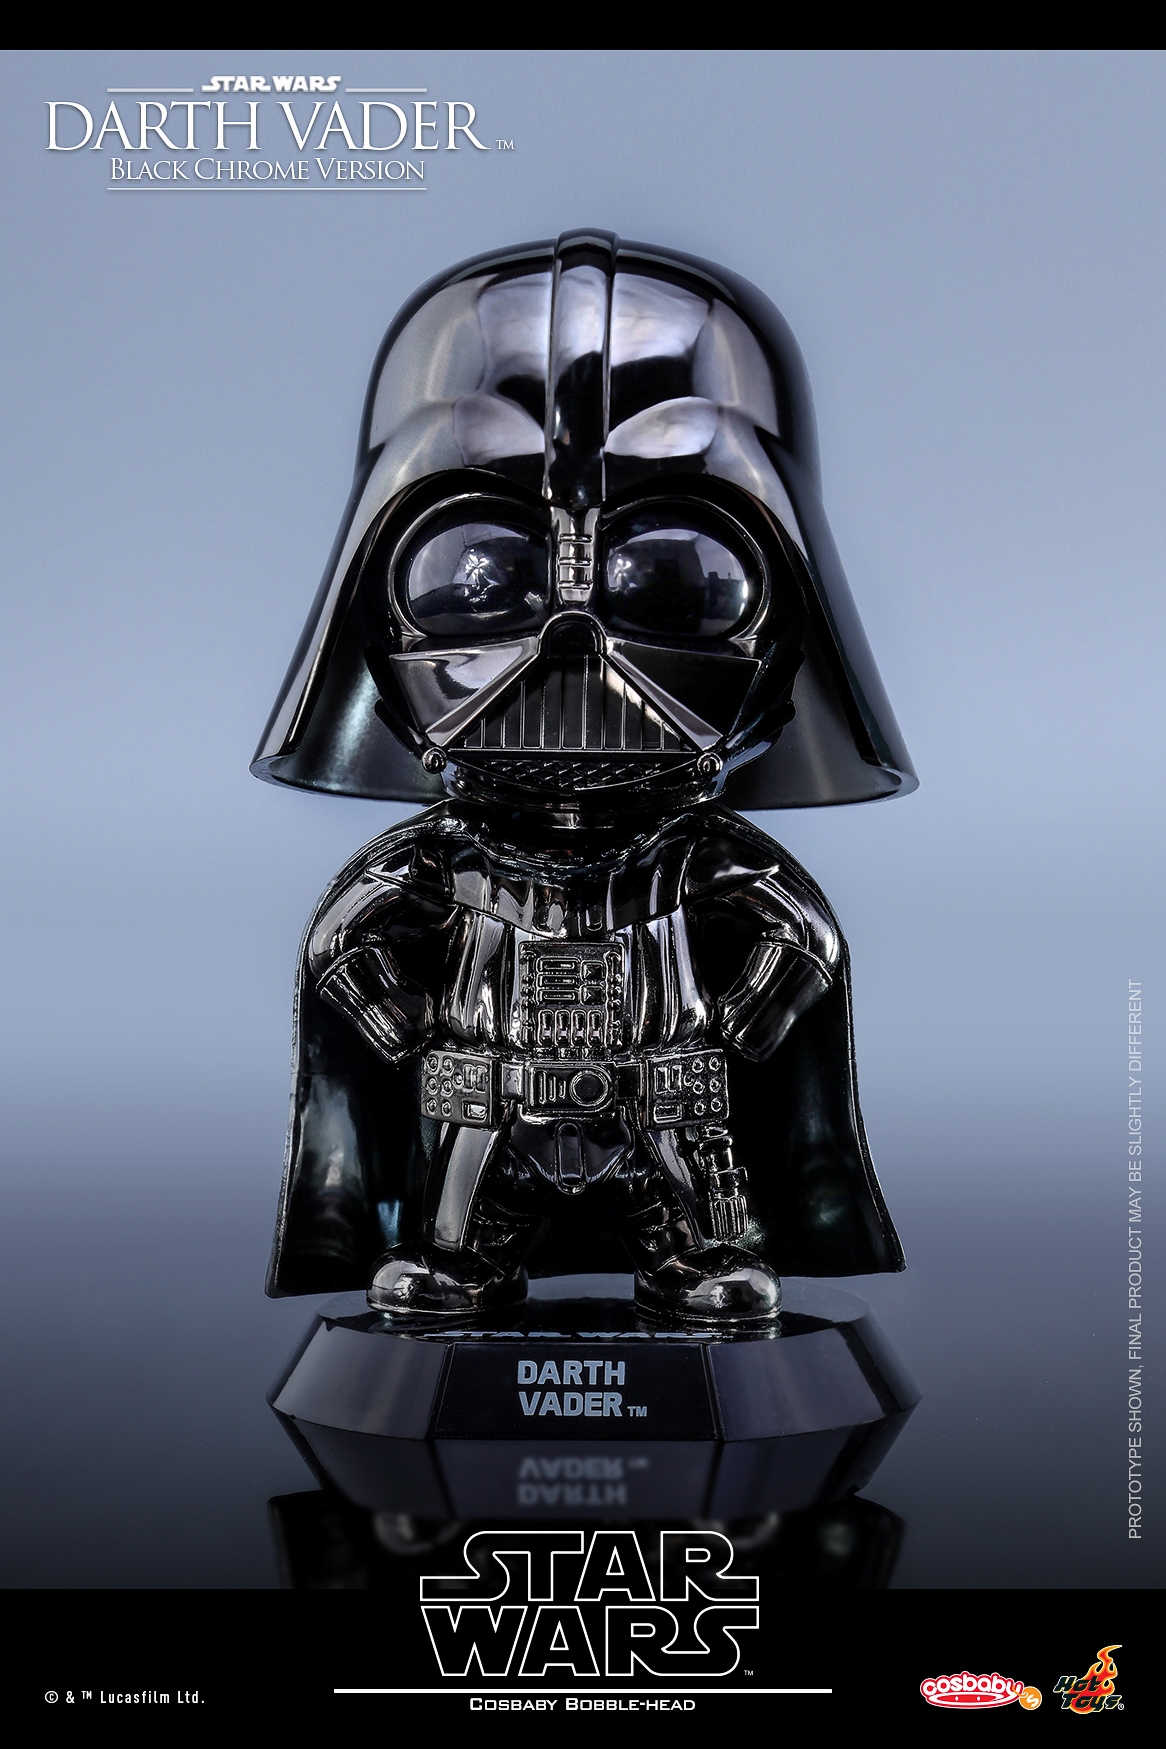 Hot-Toys-Star-Wars-Darth-Vader-Black-Chrome-Cosbaby-001.jpg